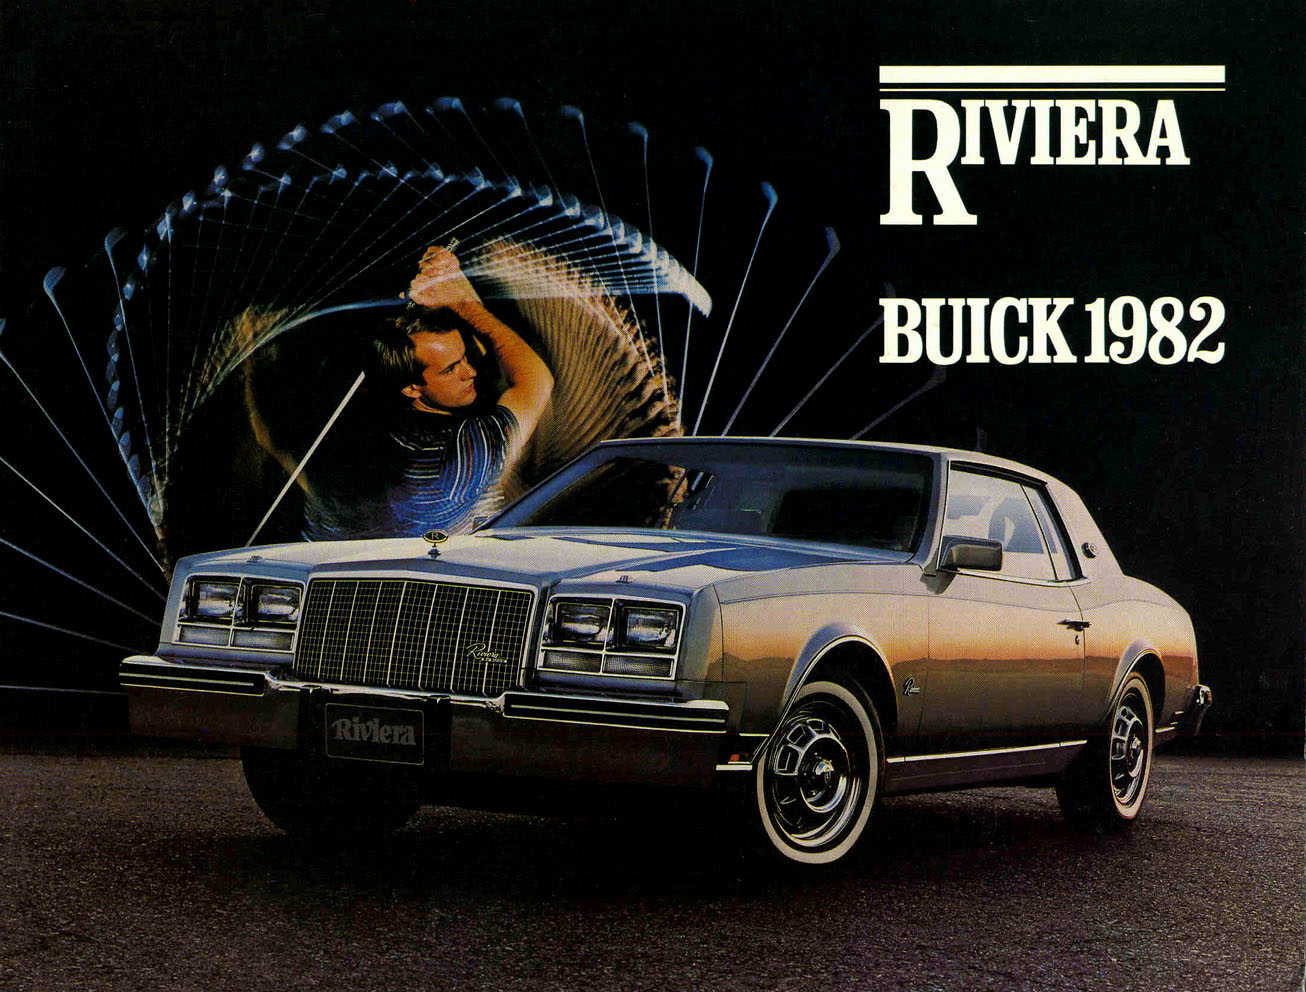 n_1982 Buick Riviera Folder-01.jpg